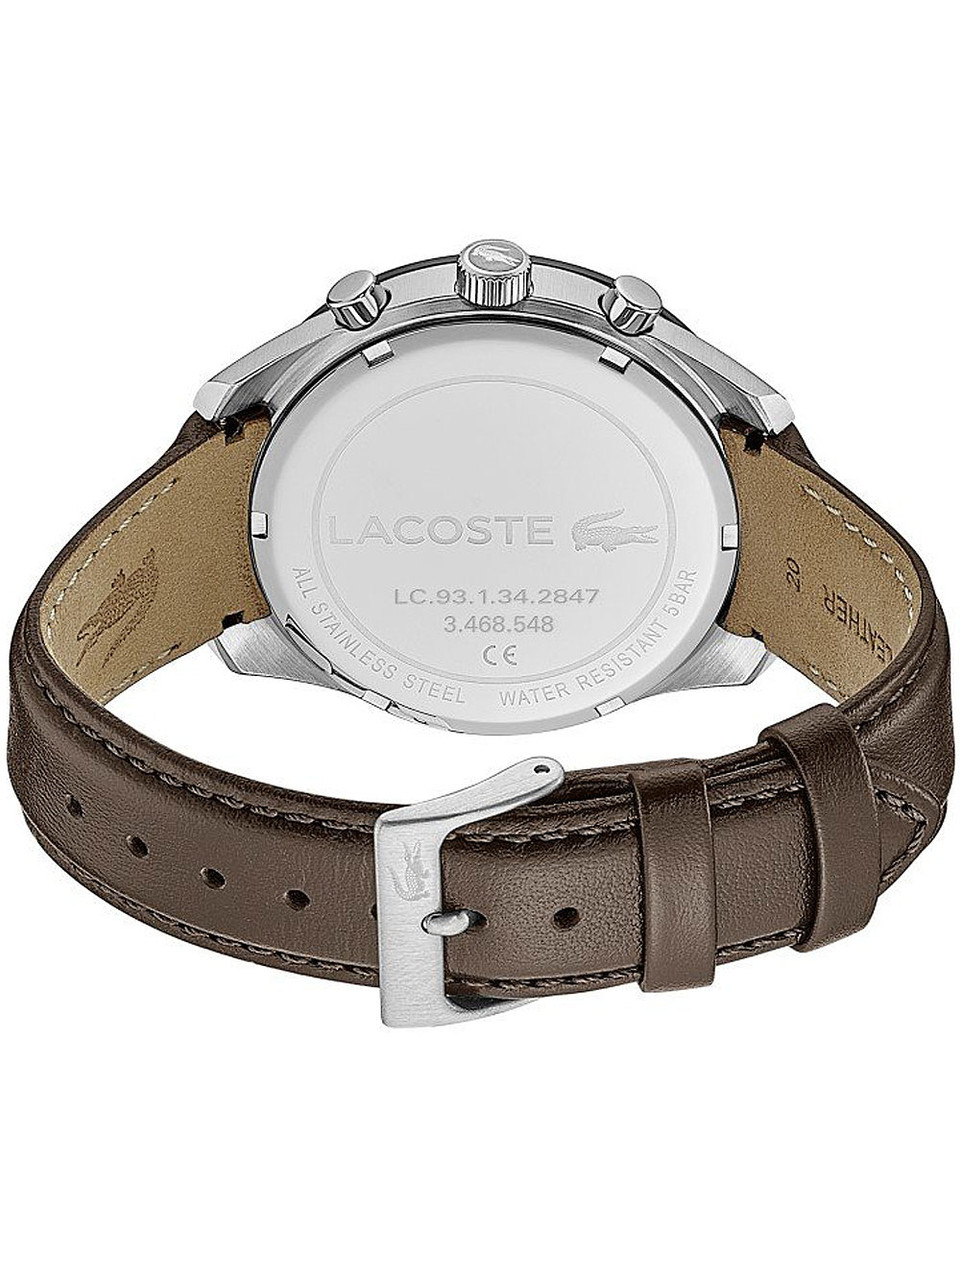 Genuine Boston 42mm chrono | Lacoste Watches owlica - 2011093 5ATM